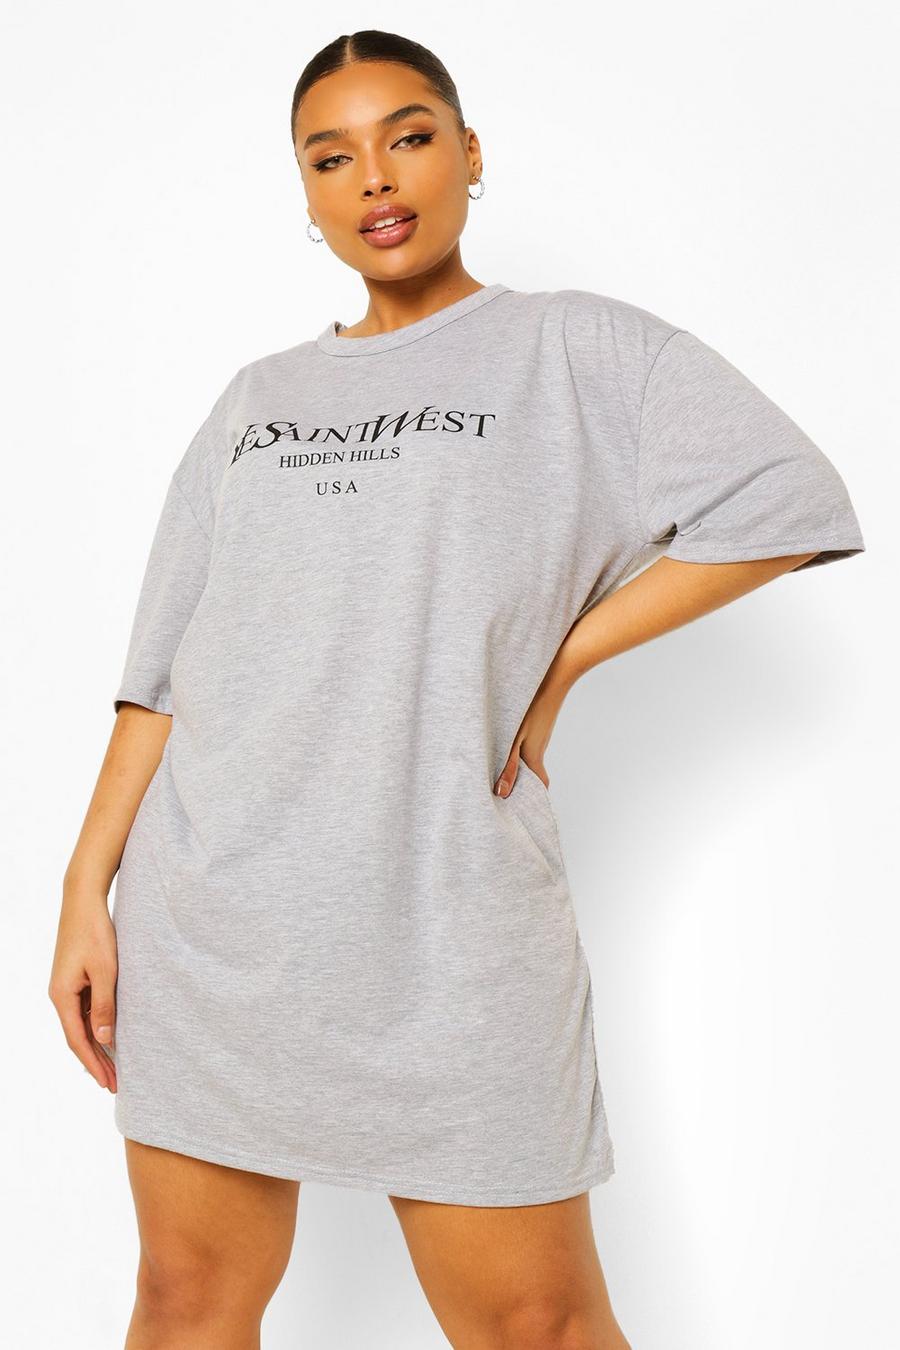 Grande taille - Robe t-shirt Ye Saint West, Grey image number 1